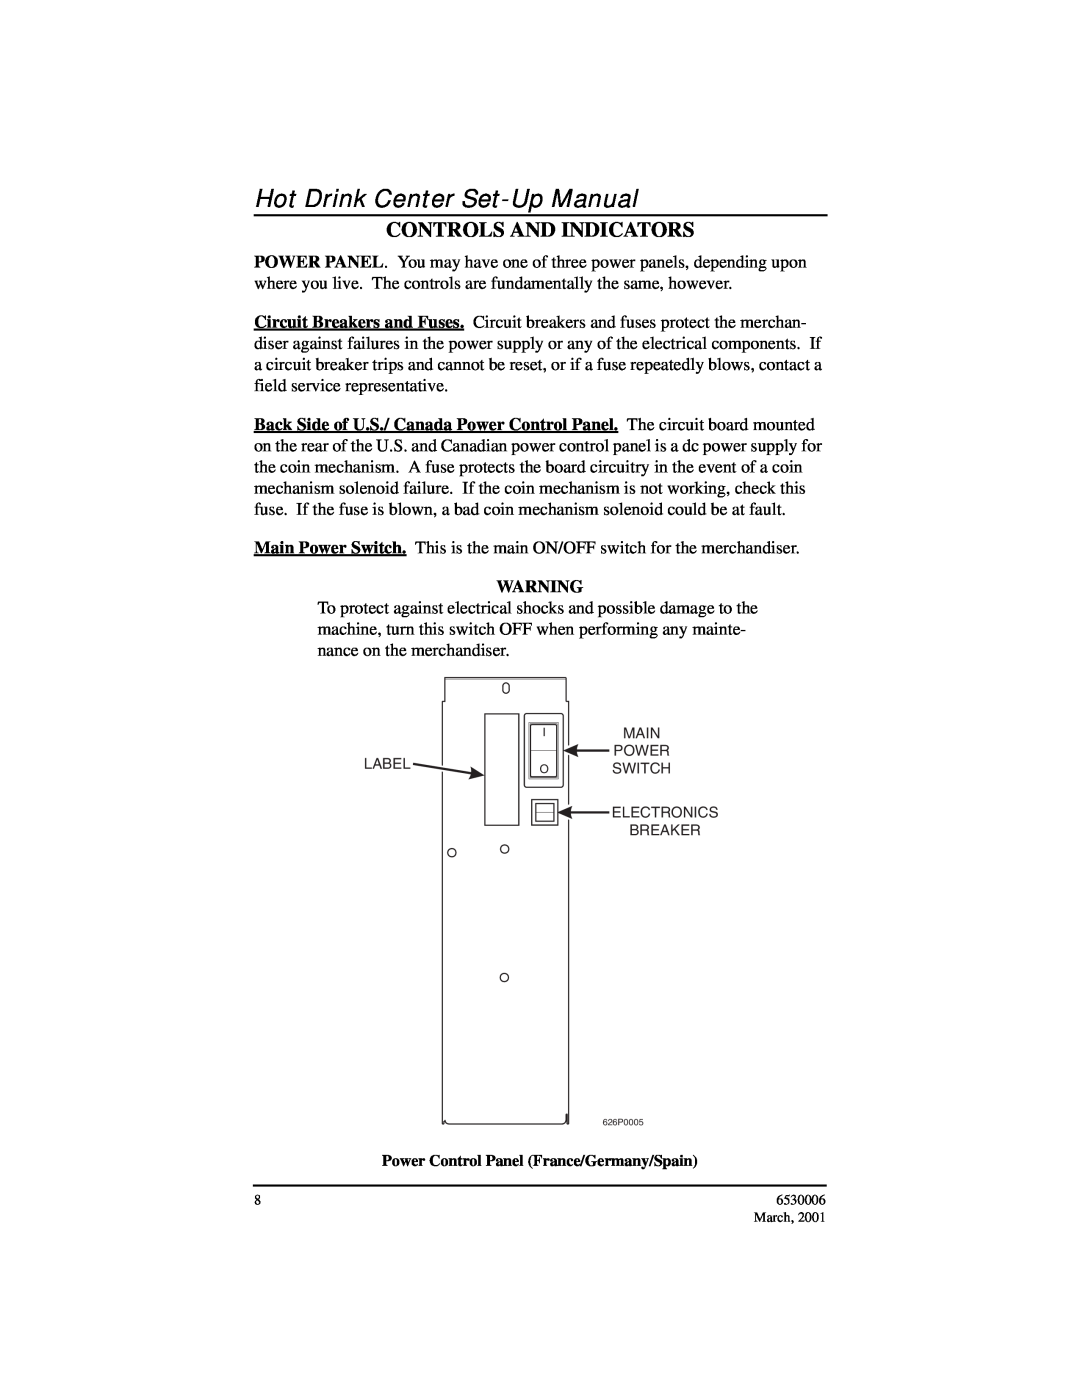 Crane Merchandising Systems 6530006 manual Controls And Indicators, Hot Drink Center Set-Up Manual 